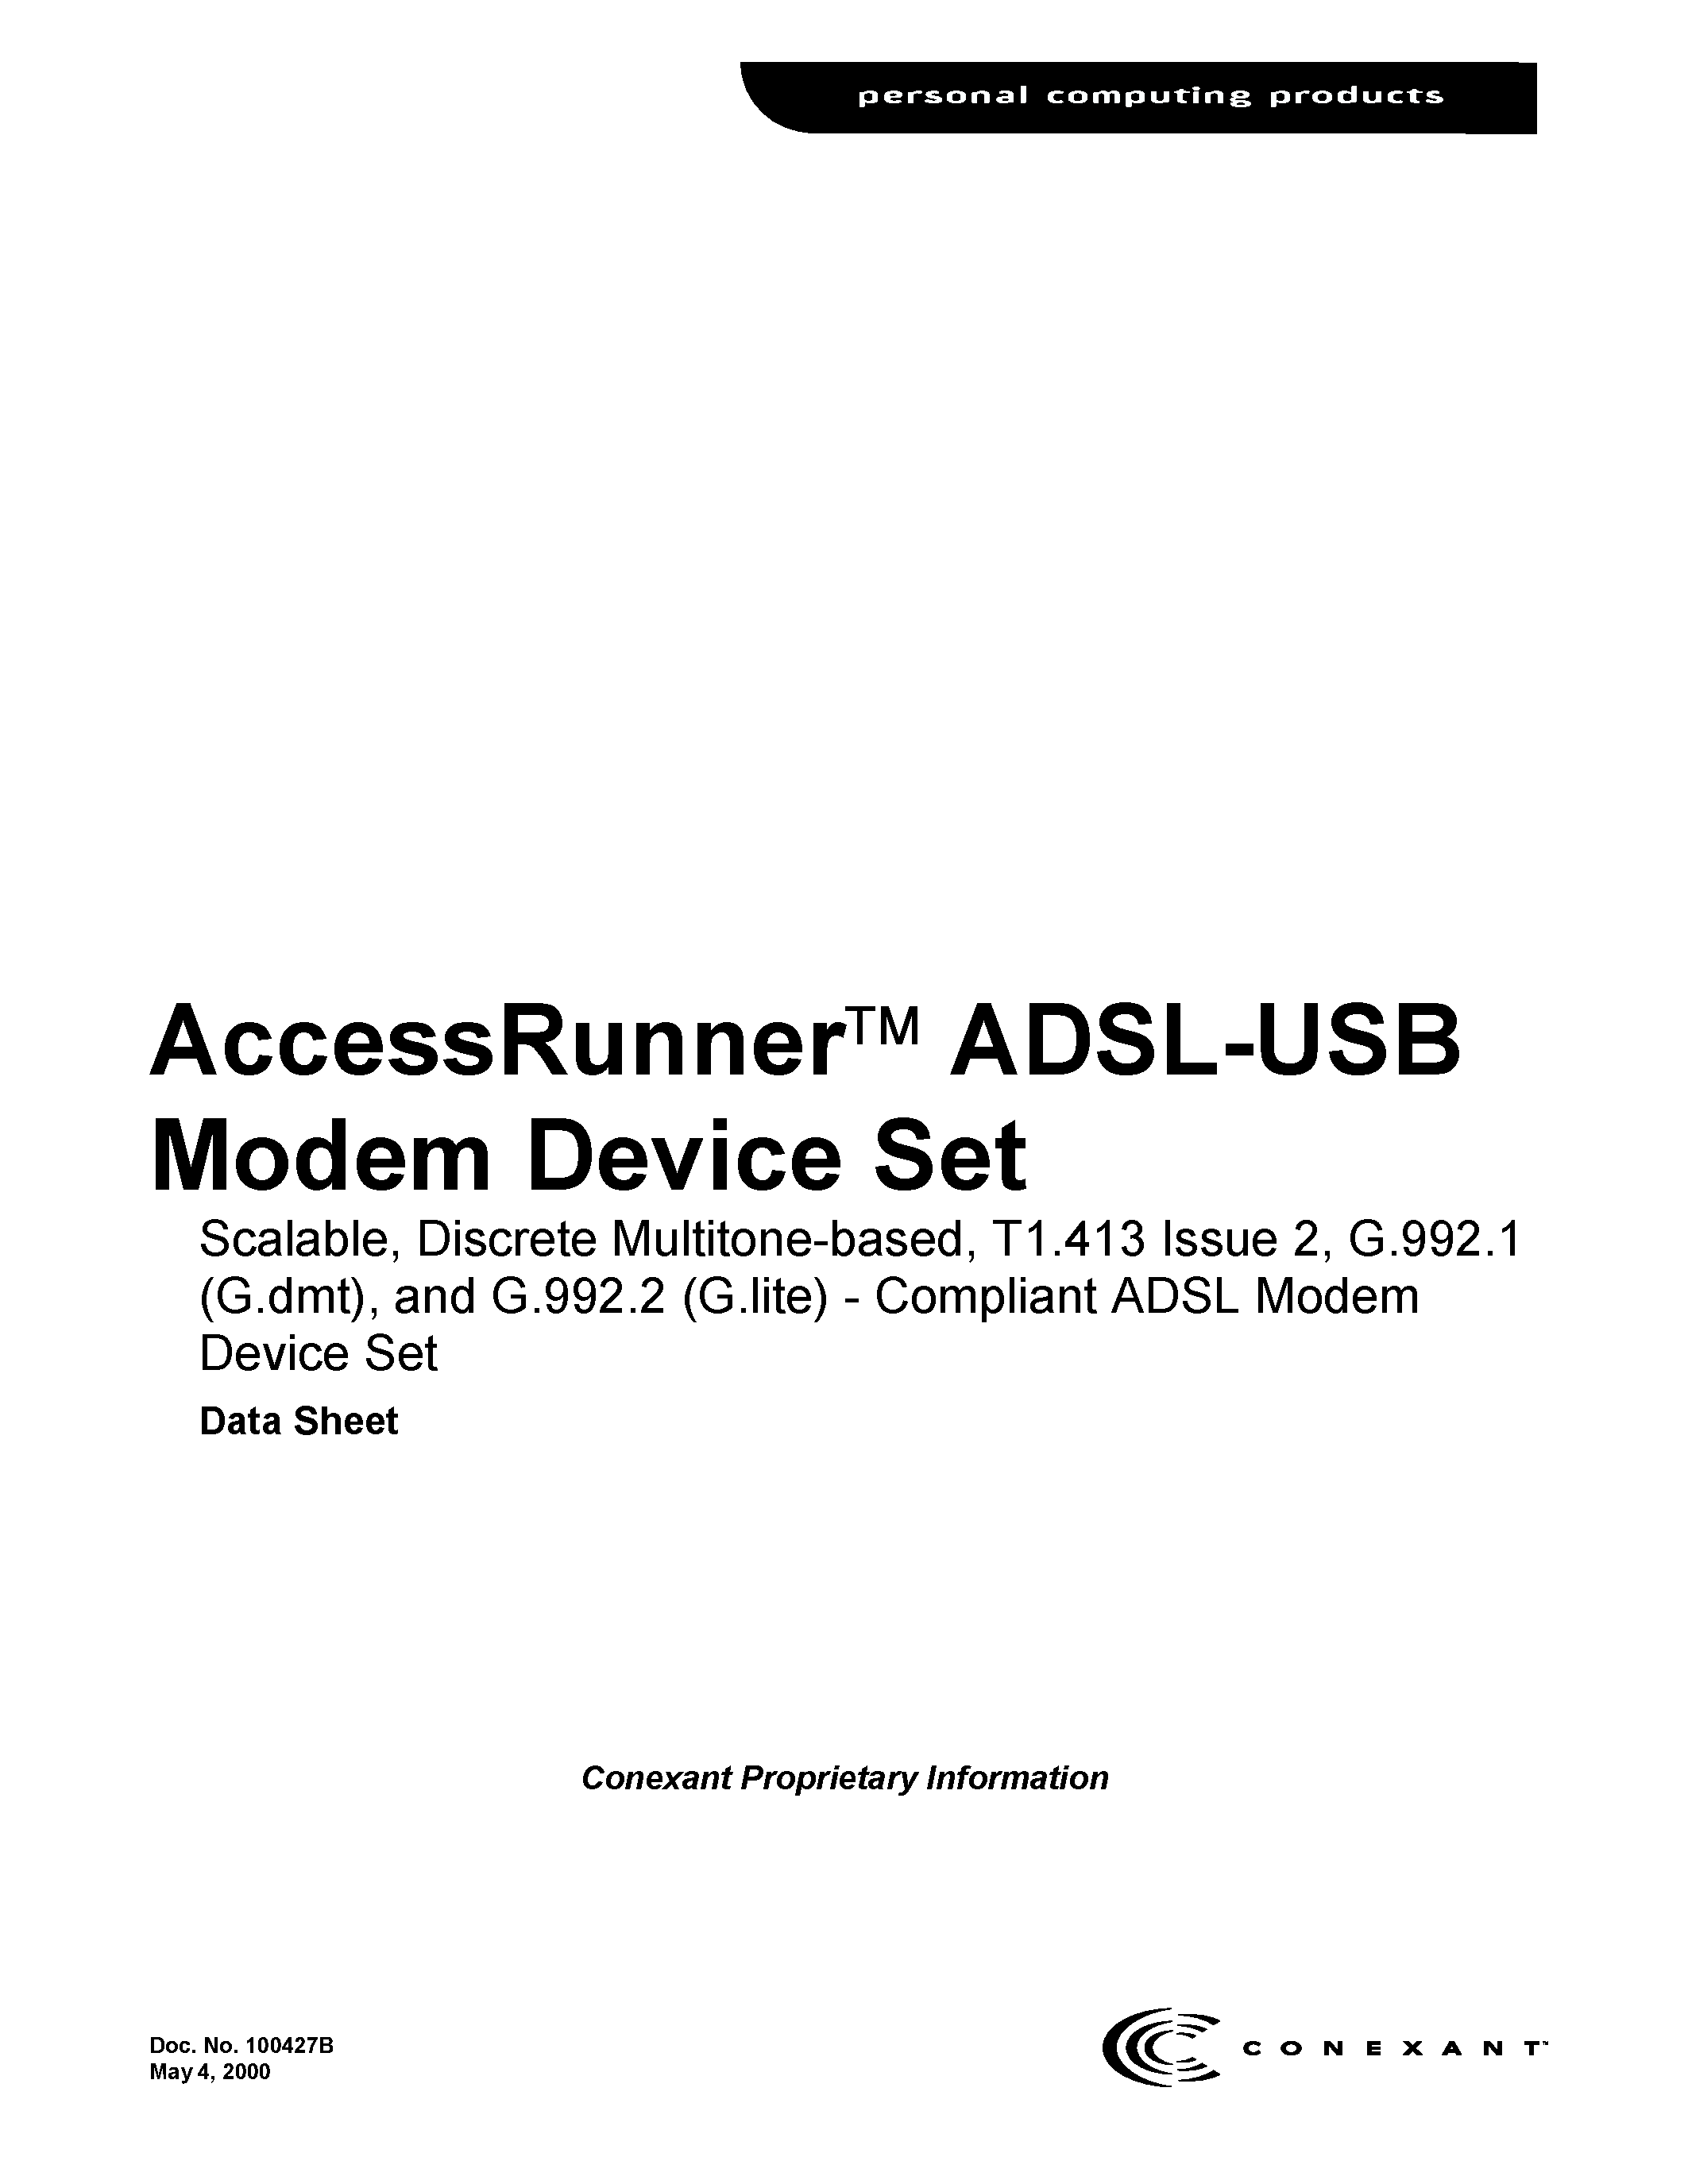 Datasheet CX11627-11 - AccessRunner ADSL-USB Modem Device Set page 1